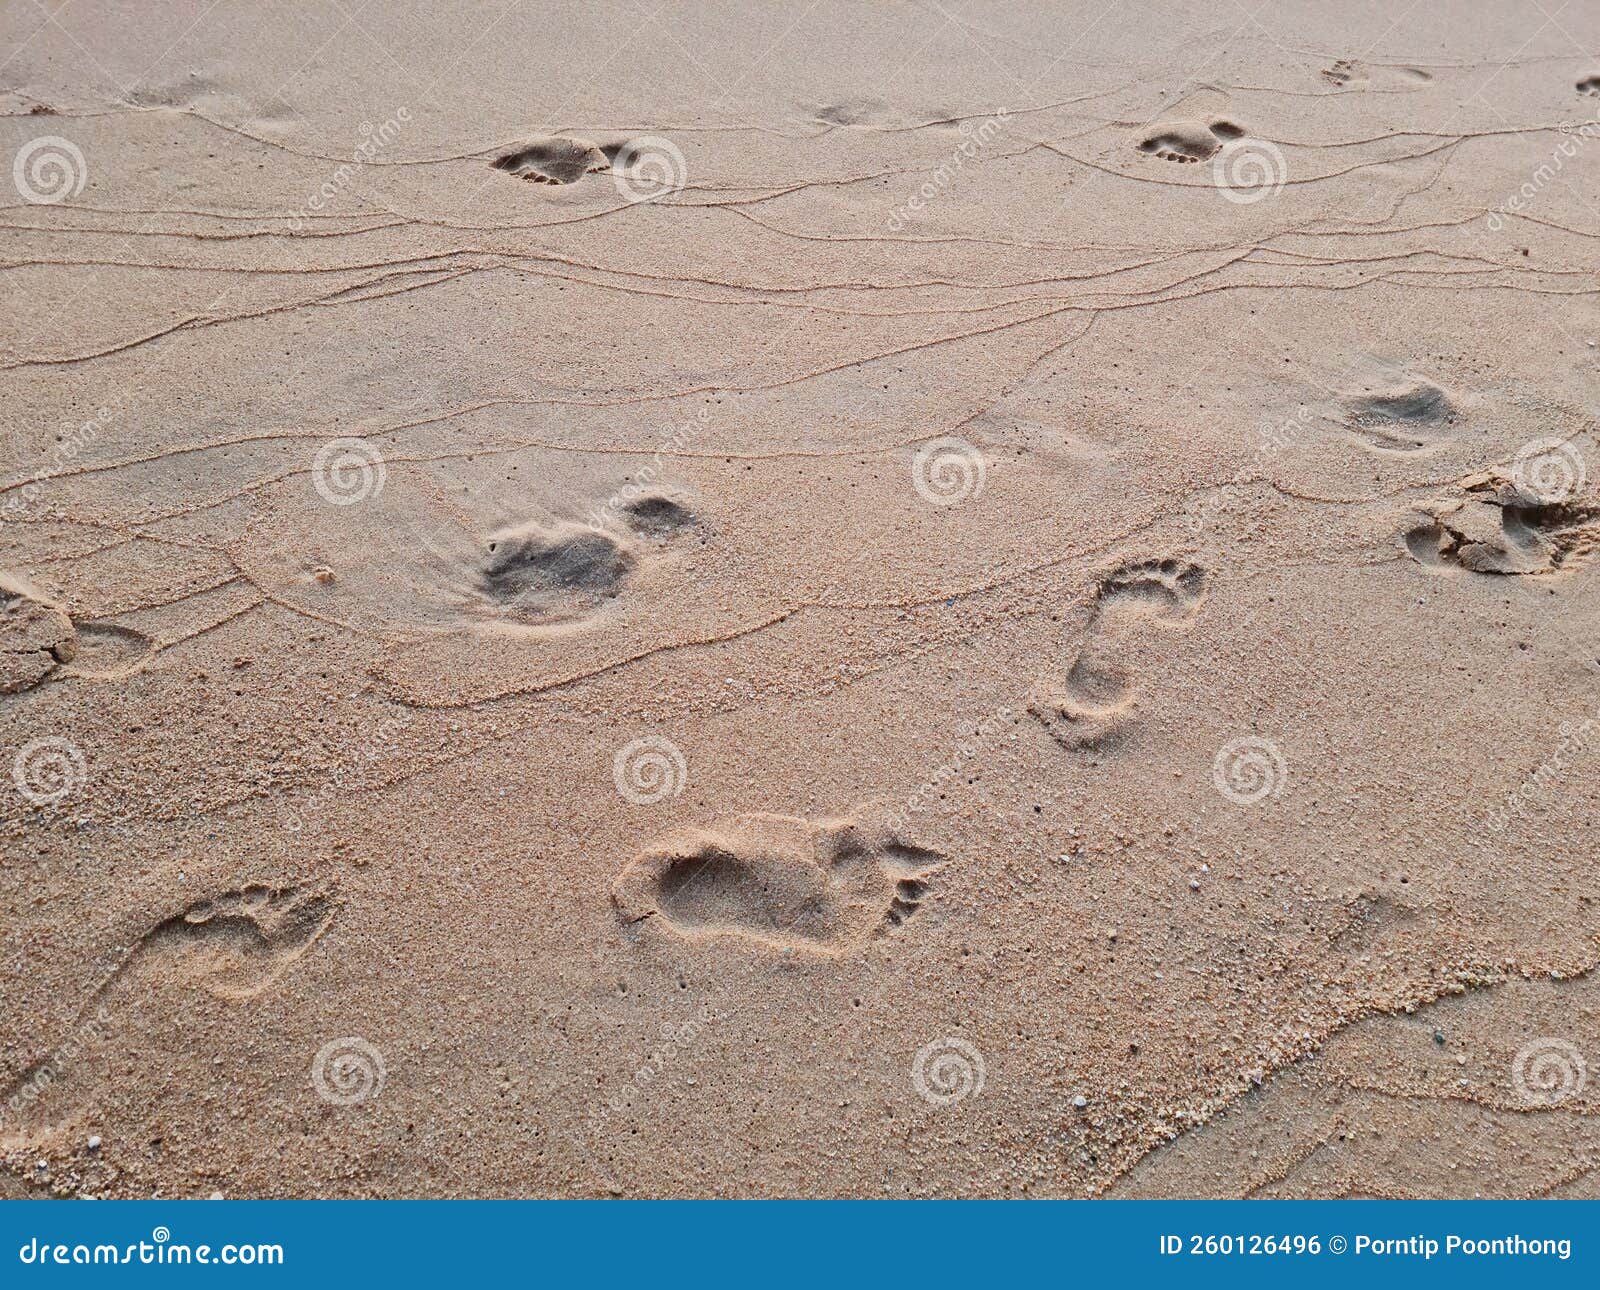 Footprints on the Sandy Beach. Footsteps of People Walking by the Sea ...